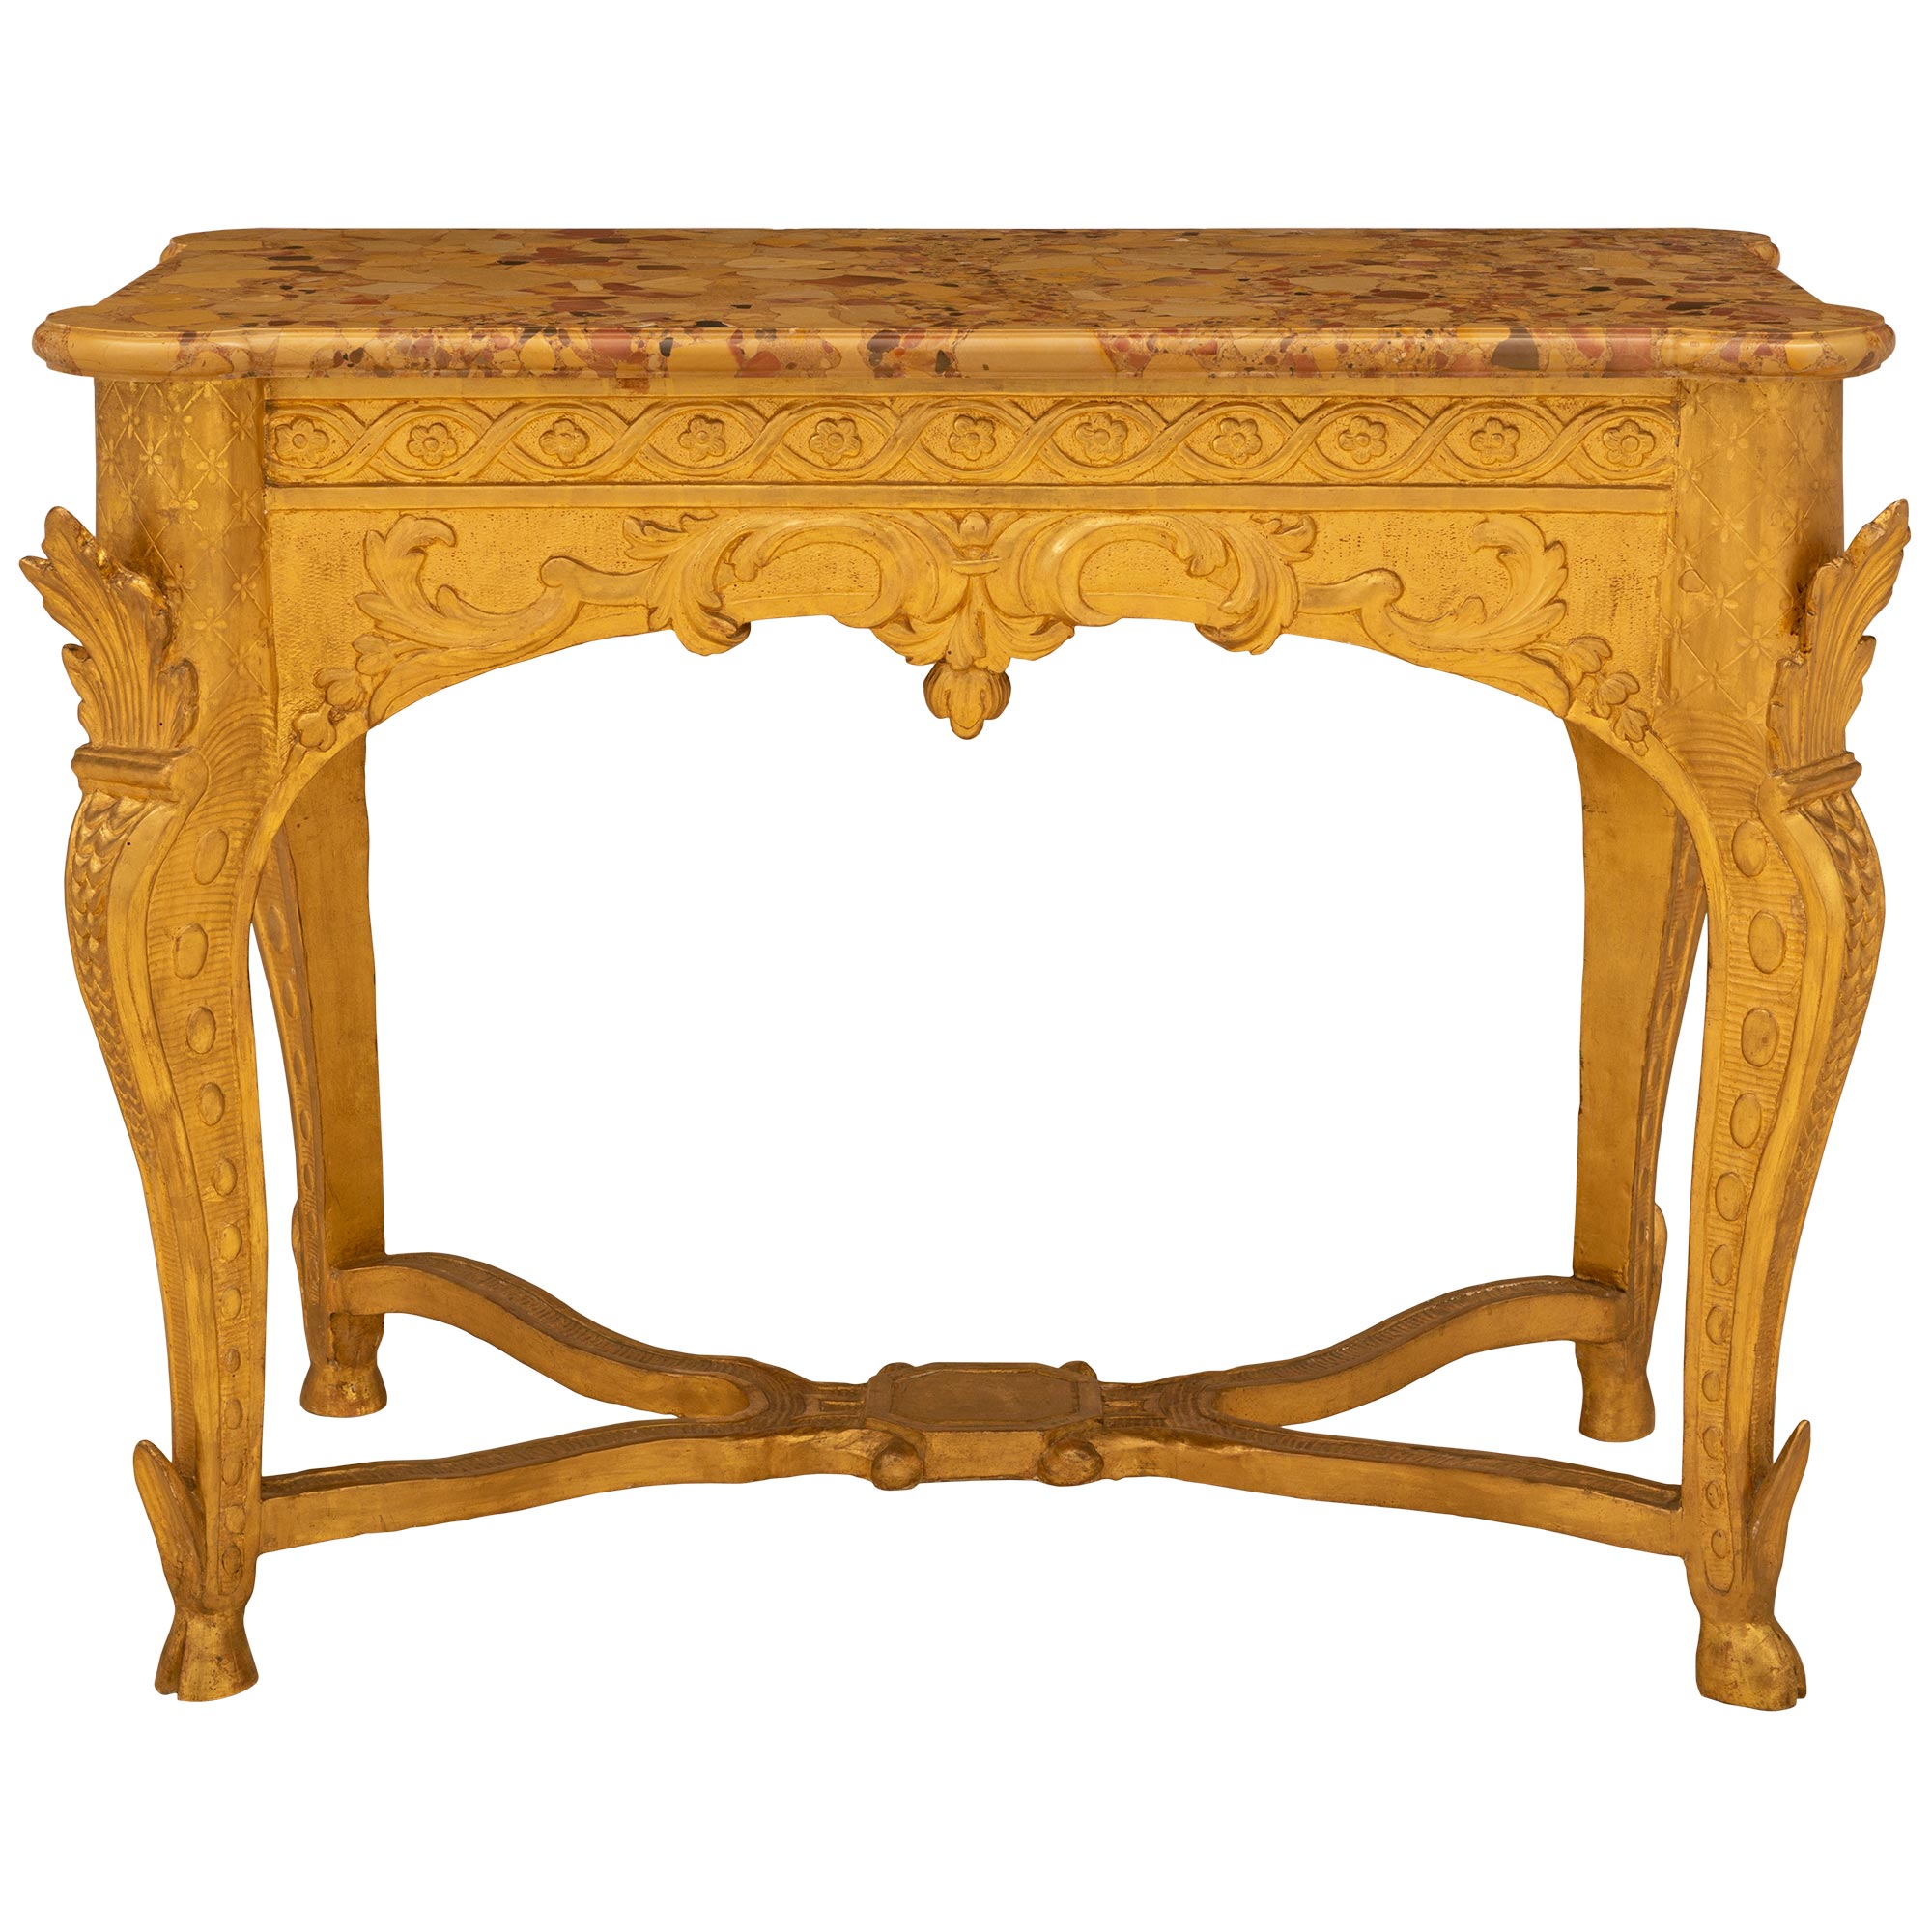 Konsole aus vergoldetem Holz aus der Regence-Periode des 18. Jahrhunderts